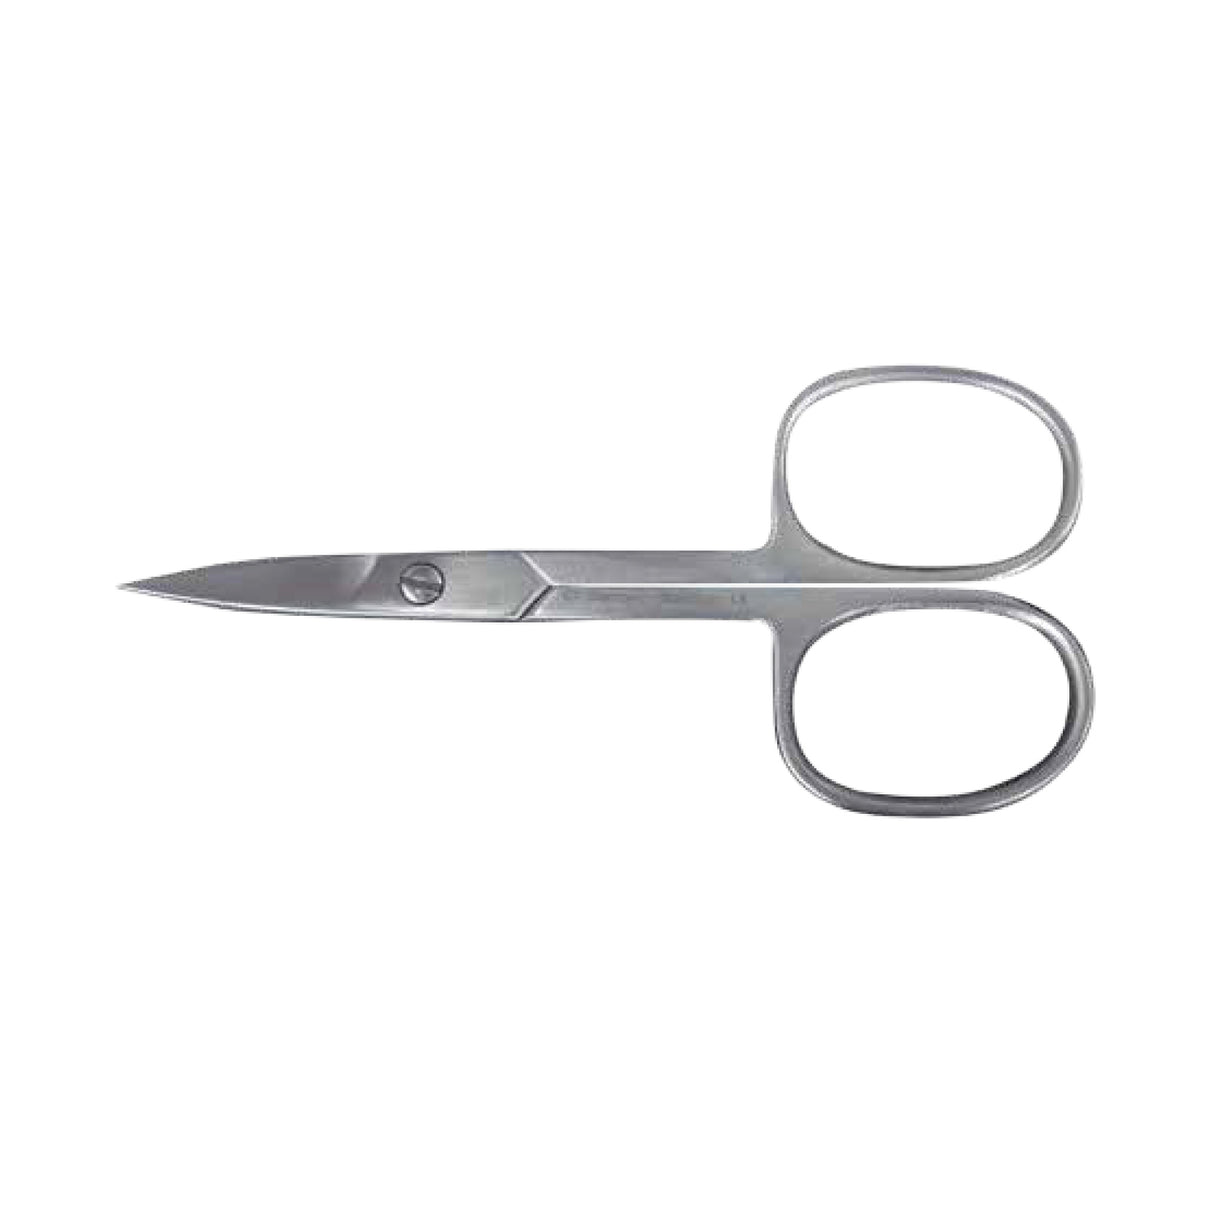 Scissors for shortening nails, straight